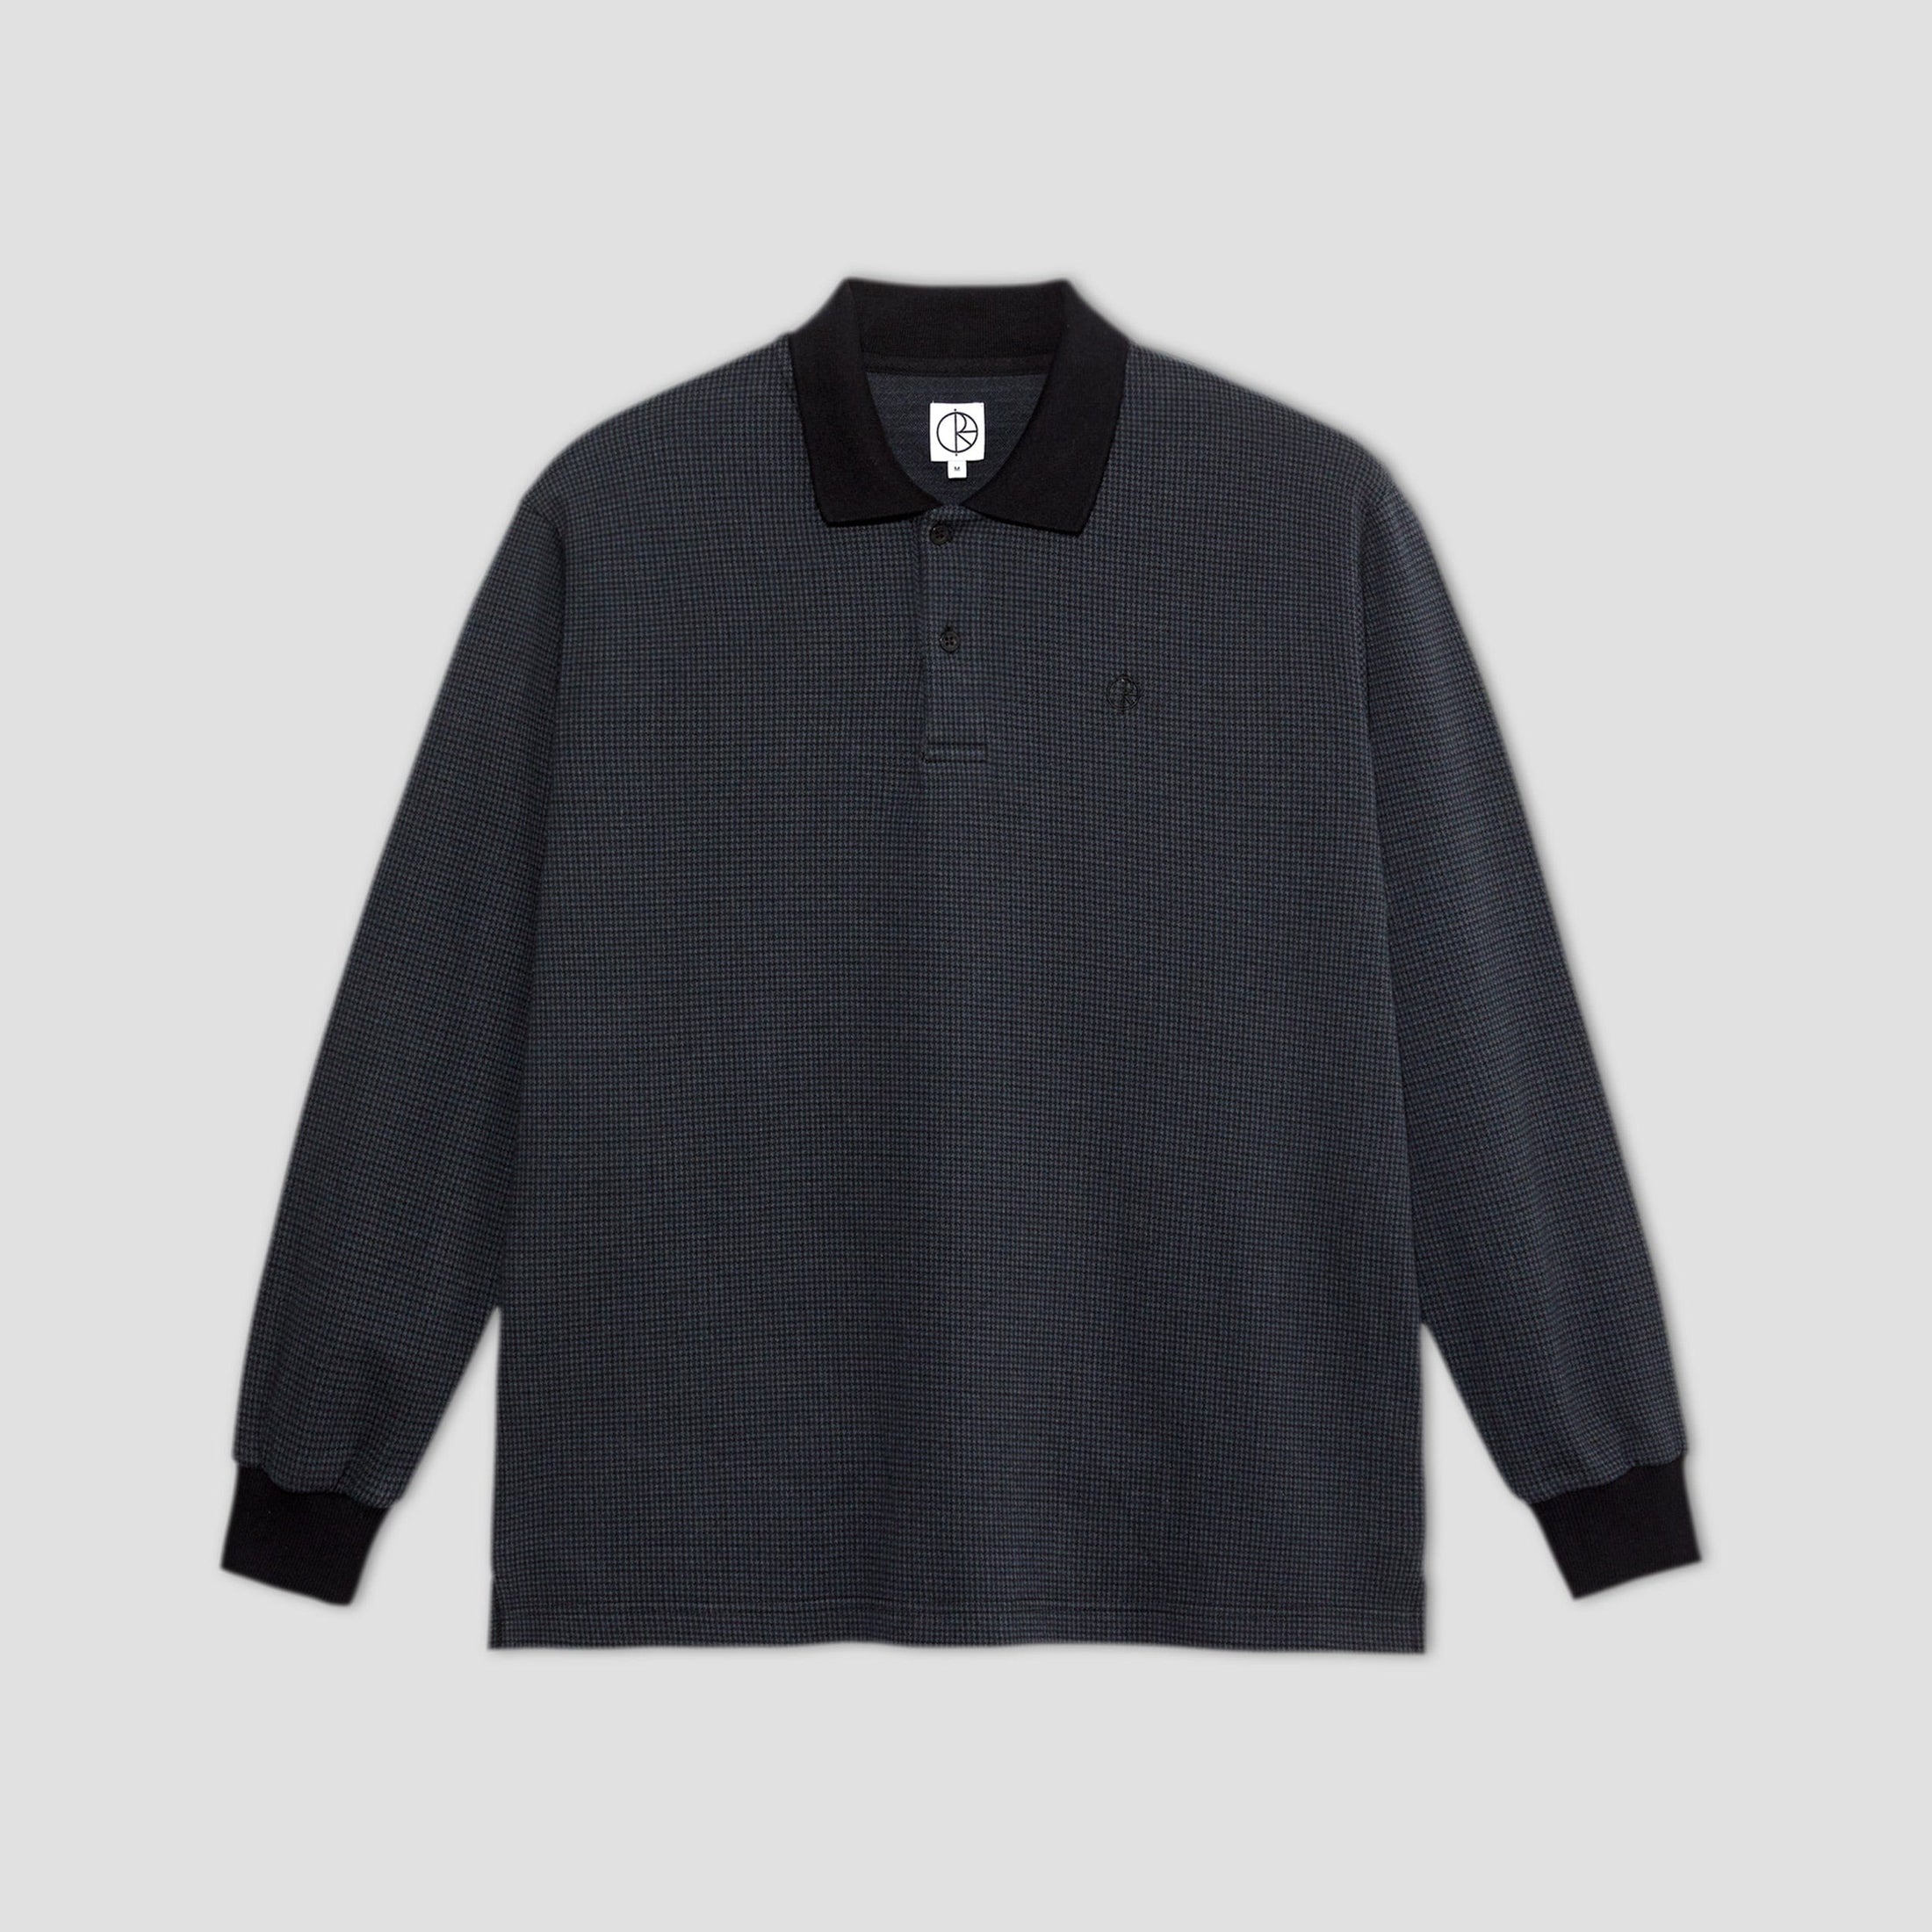 Polar Polo Long Sleeve Shirt Houndstooth Black / Grey